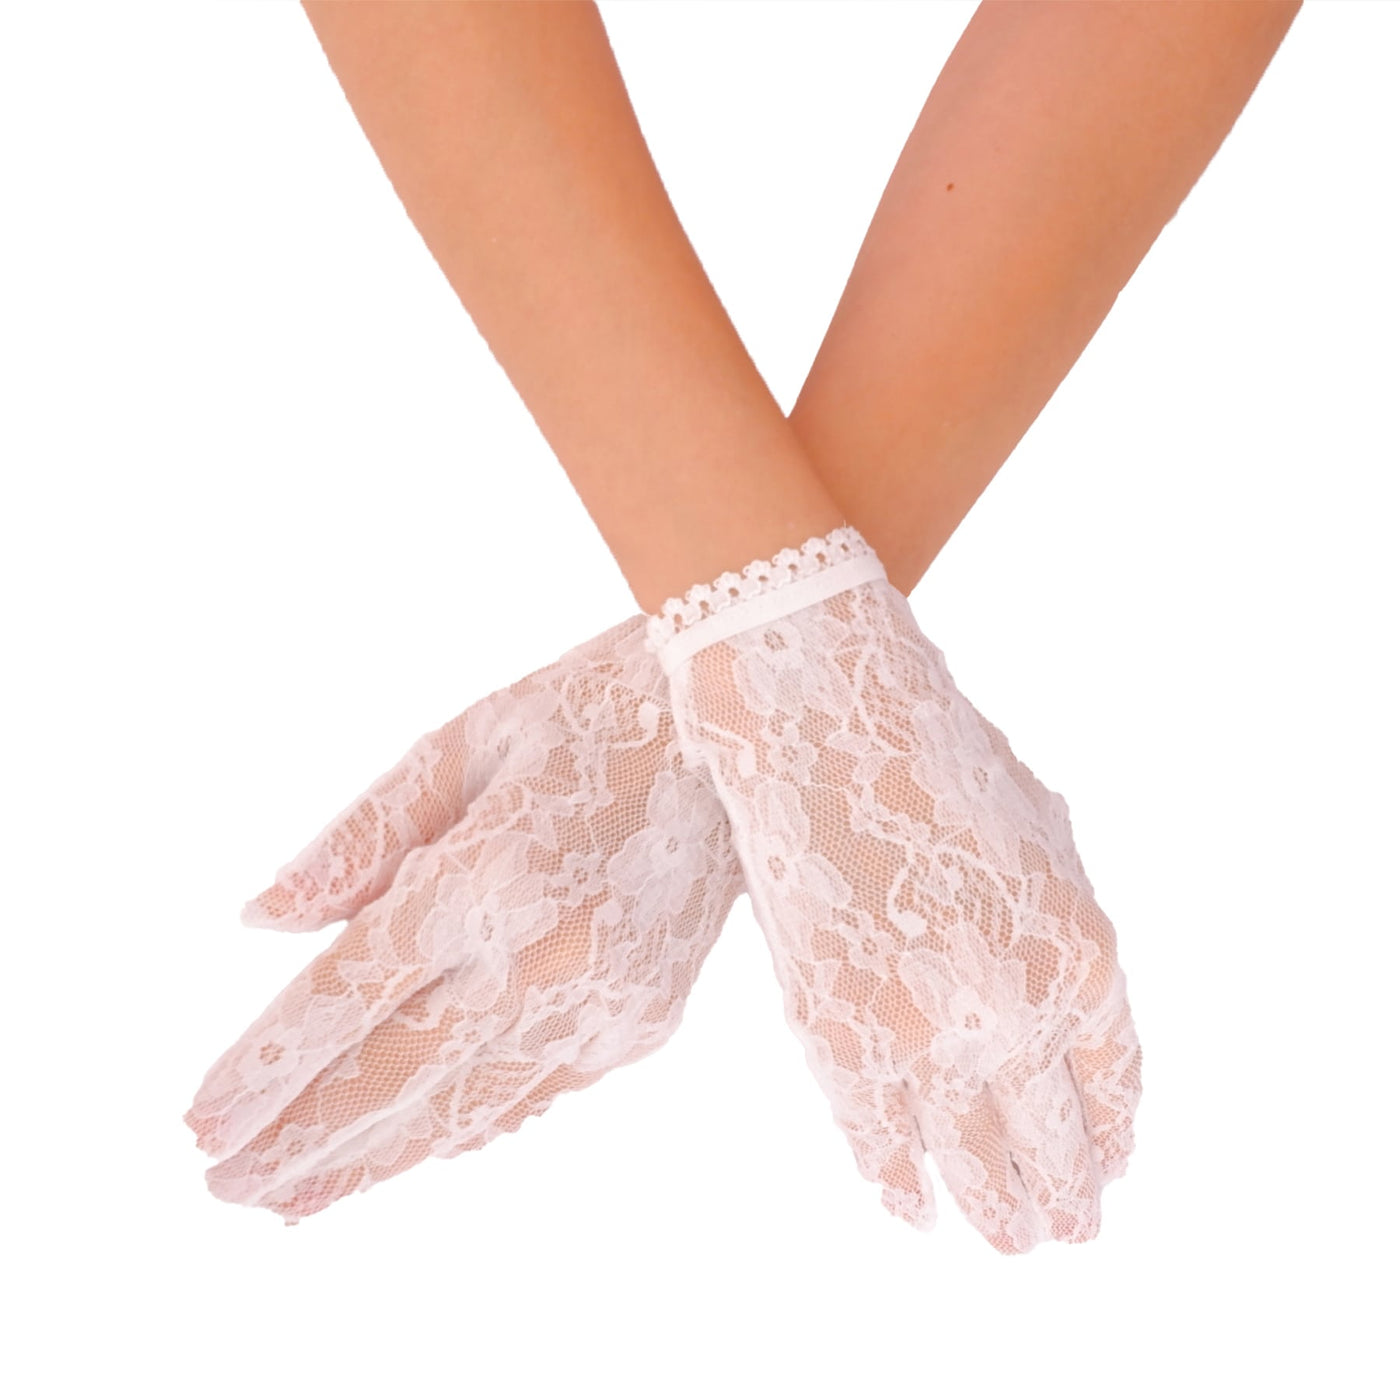 Lace Elegant Bridal Gloves Special Gloves for Henna Night Wedding Gloves for Wedding Dresses